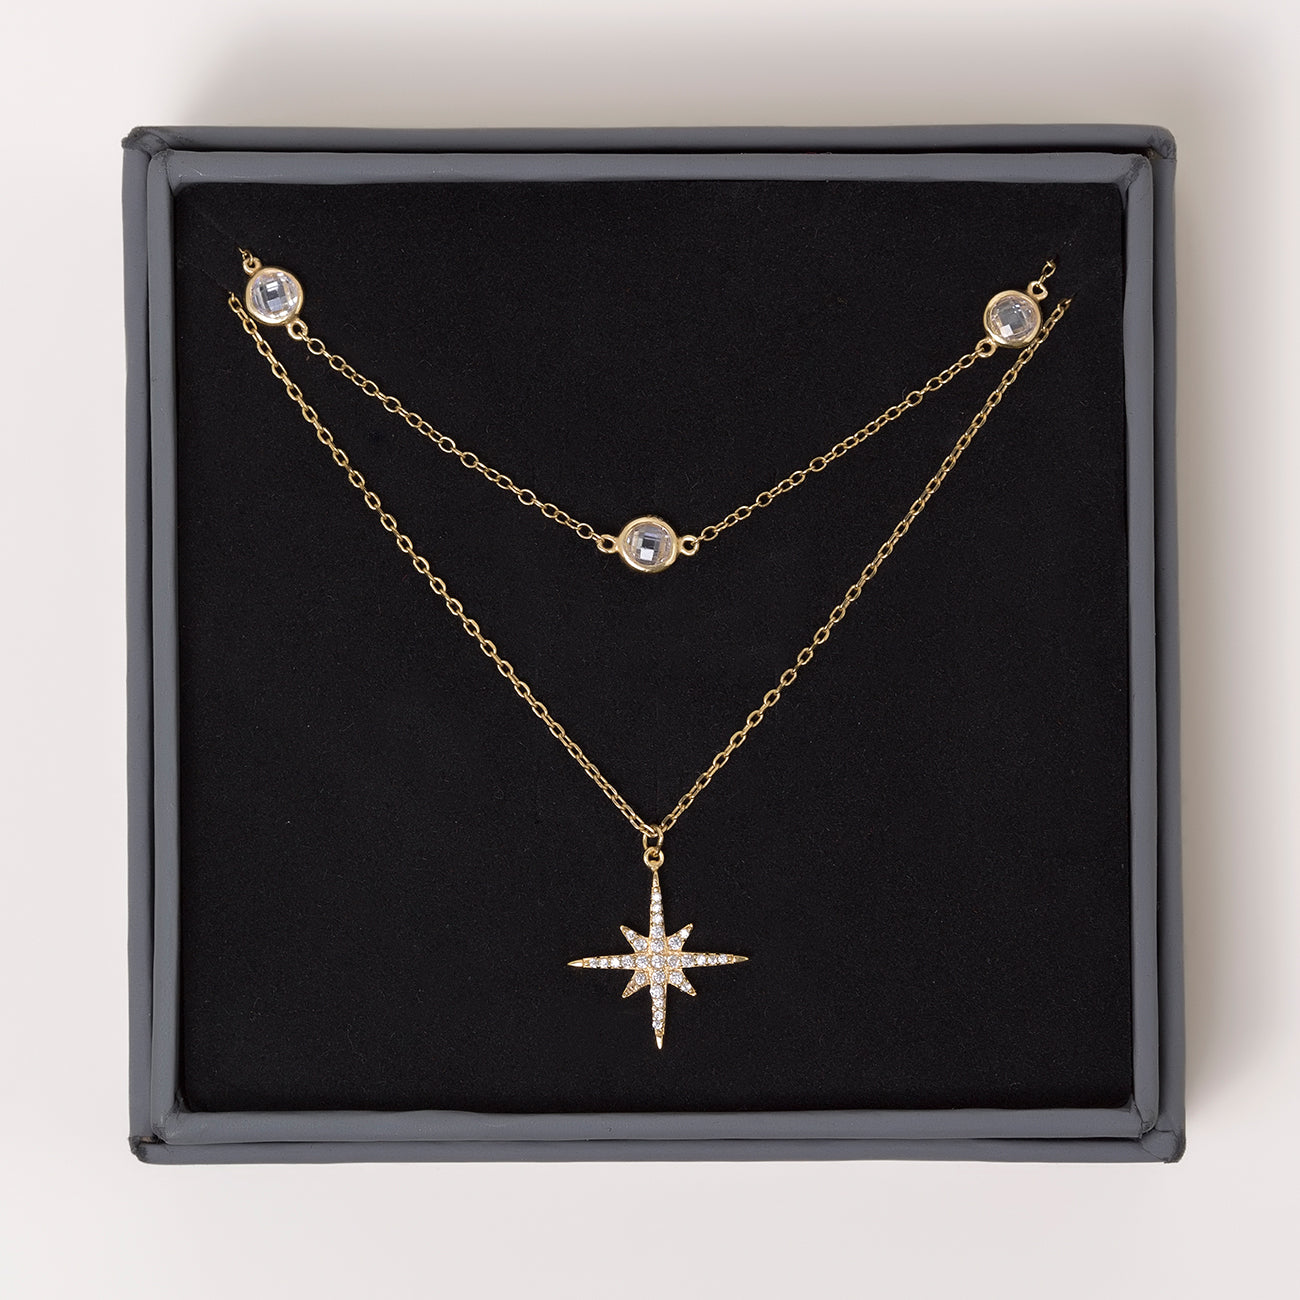 Jewelry Gift Box – AMYO Jewelry